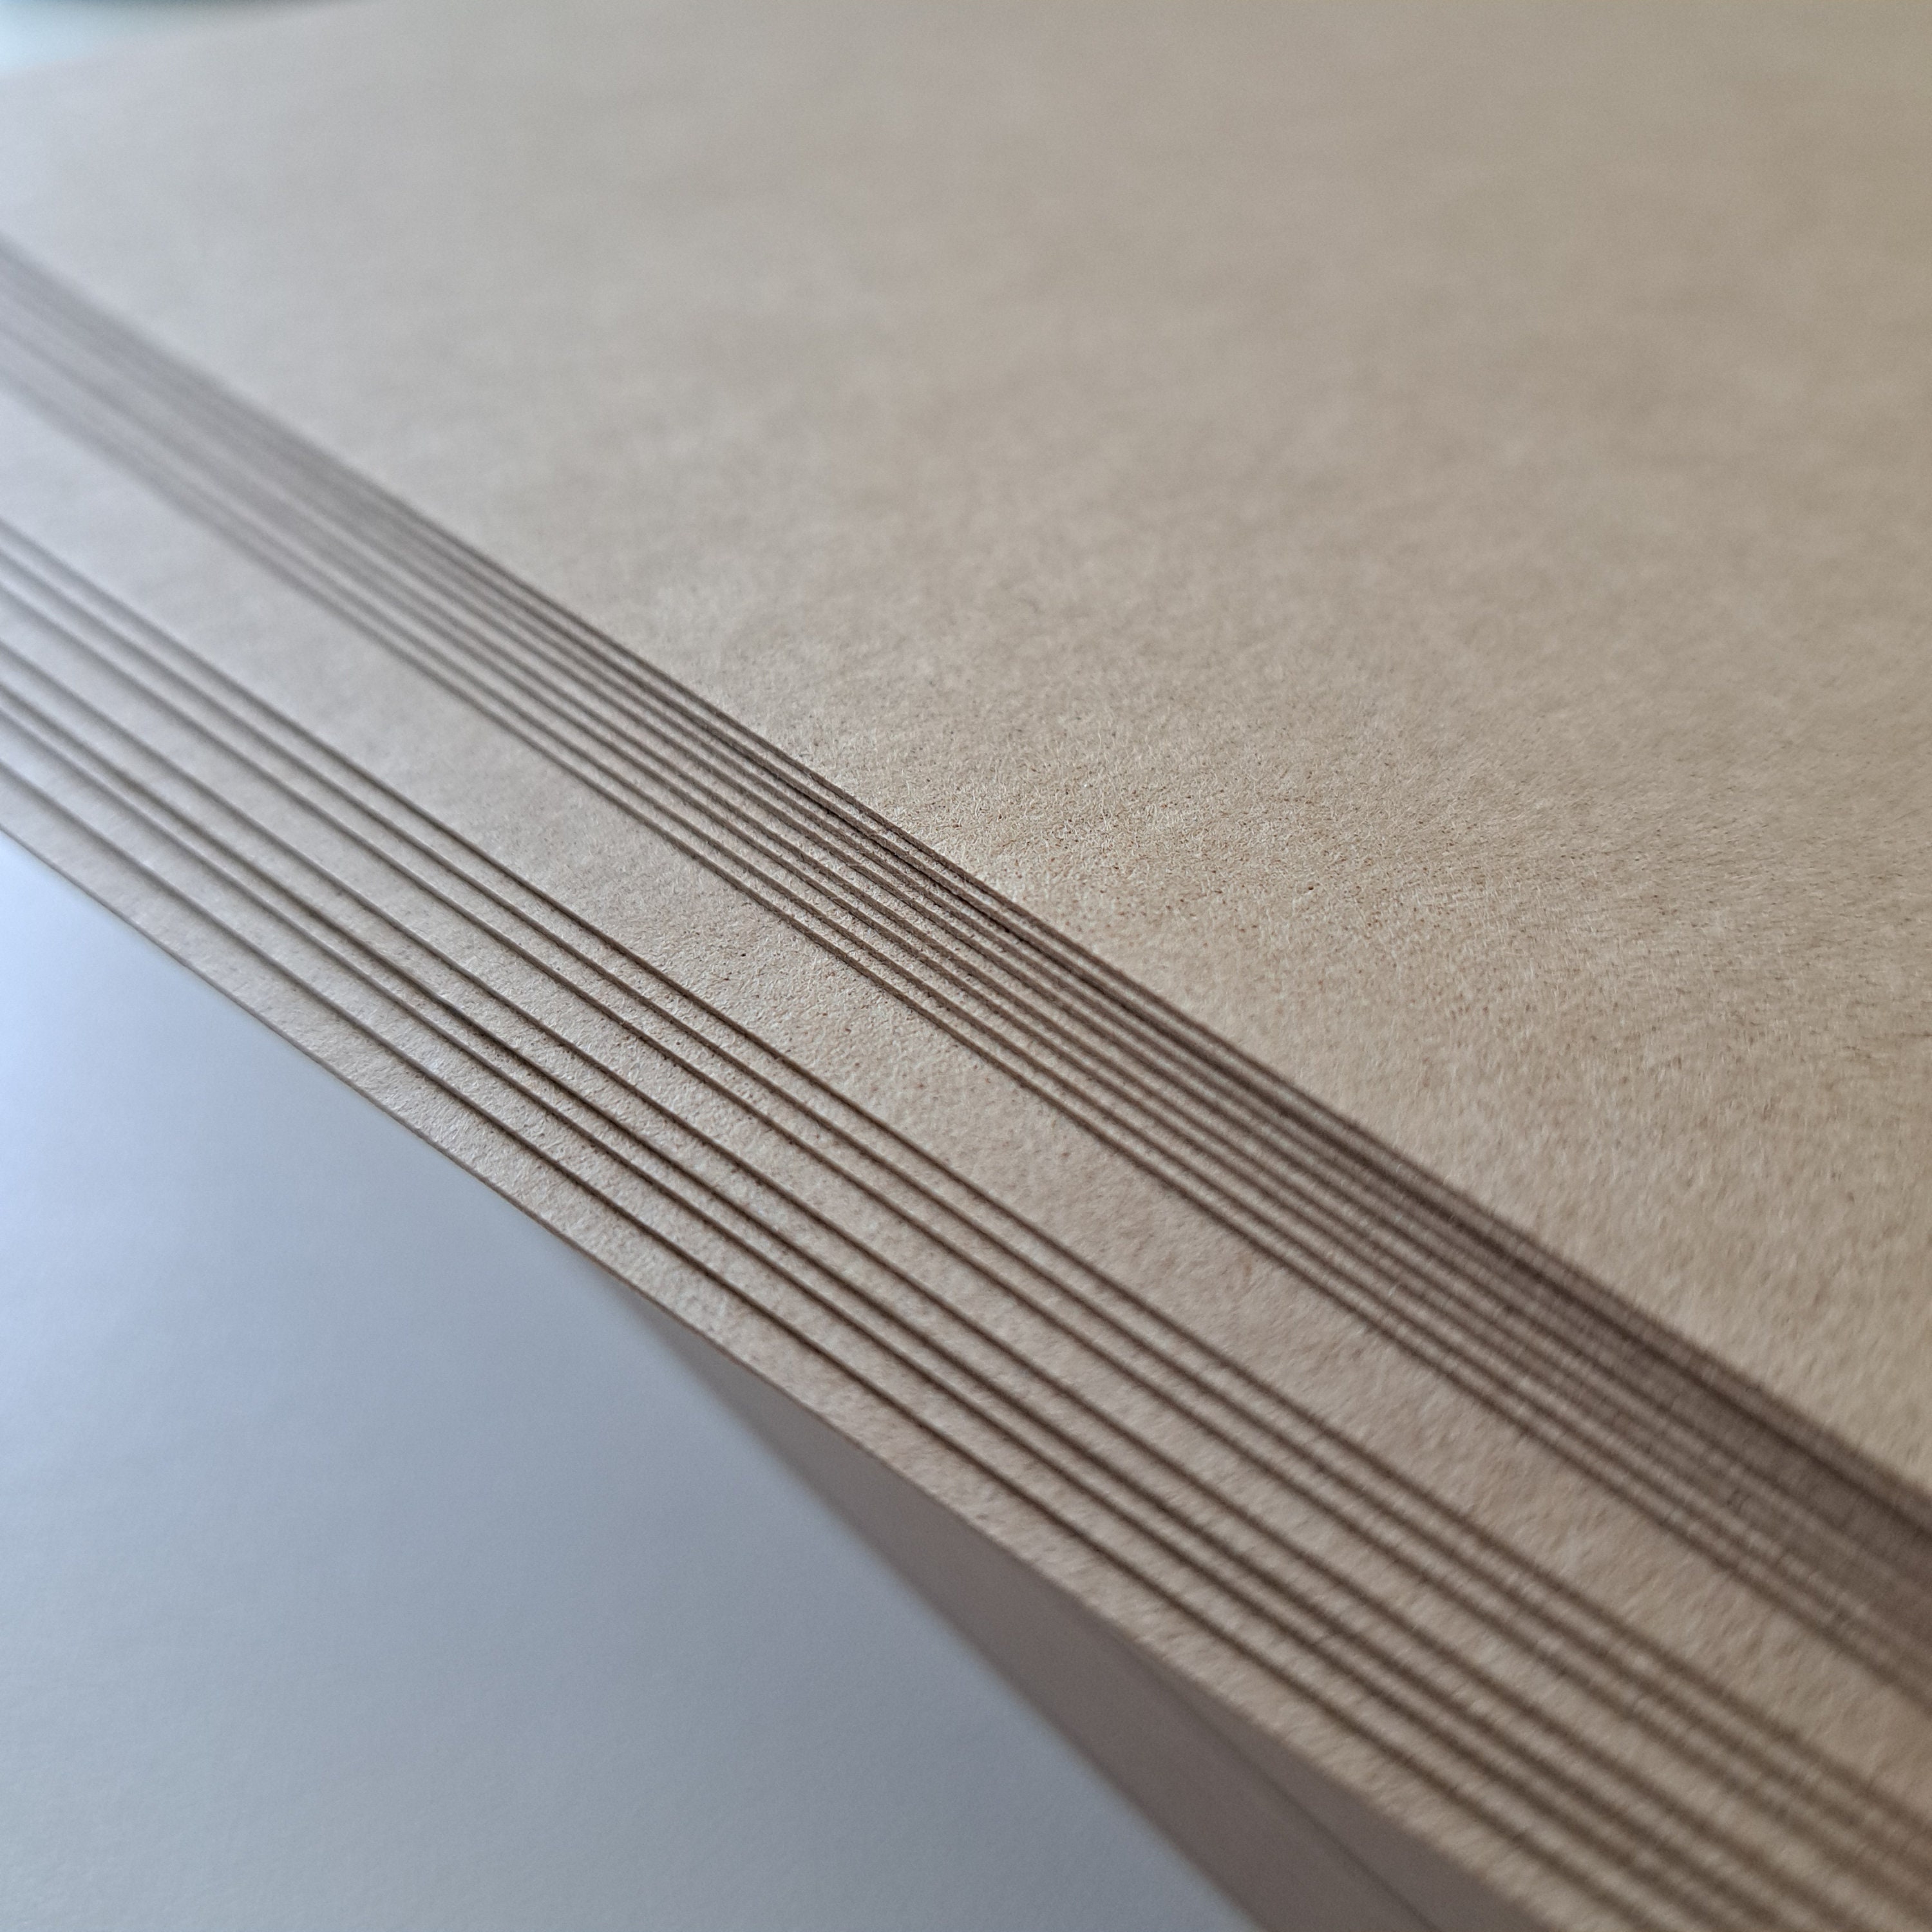 Basis 70 lb Text Weight Paper - 8.5x11 - 50 sheets - CutCardStock